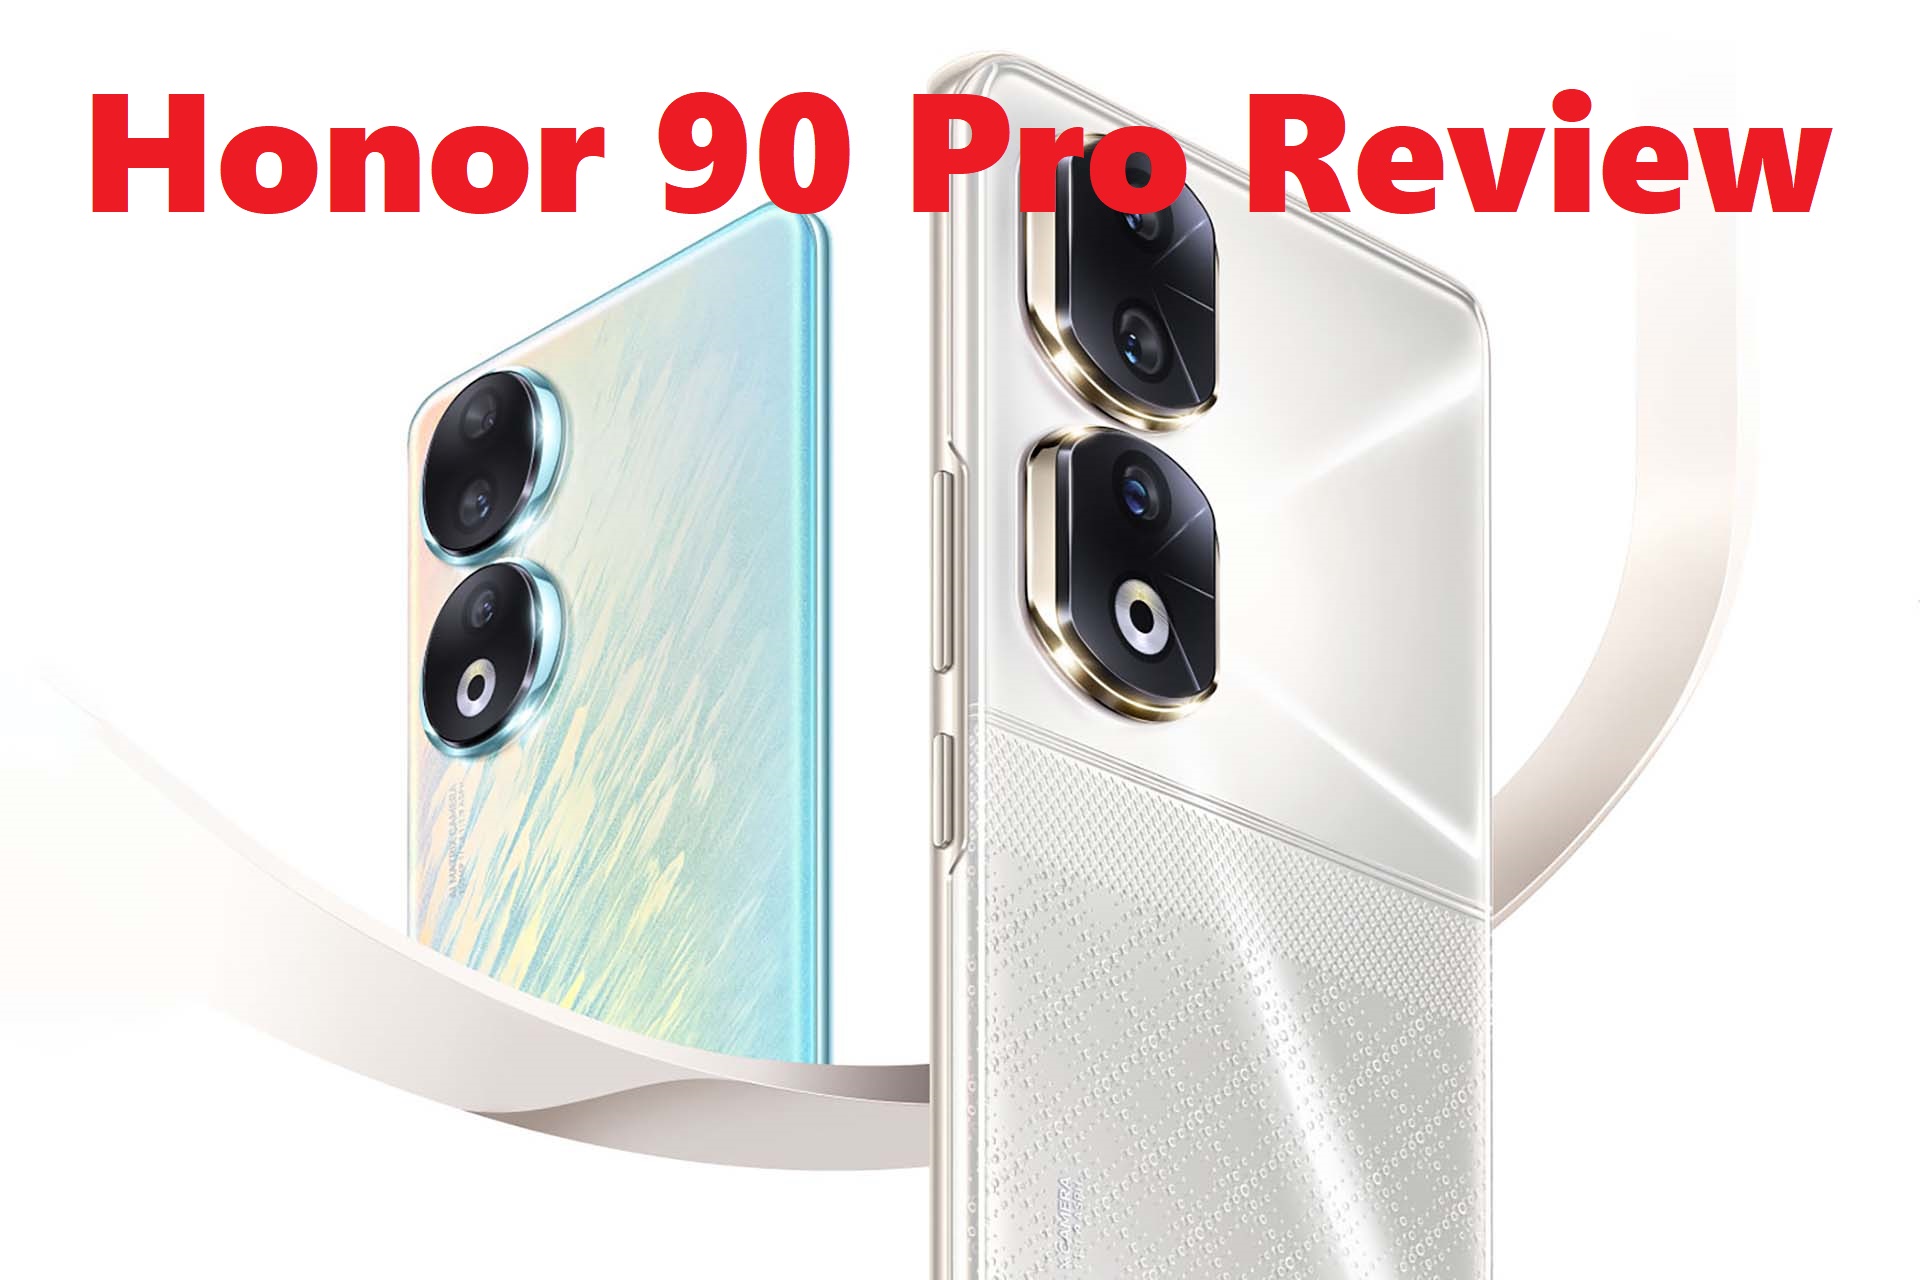 Honor 90 VS Honor 90 Pro 